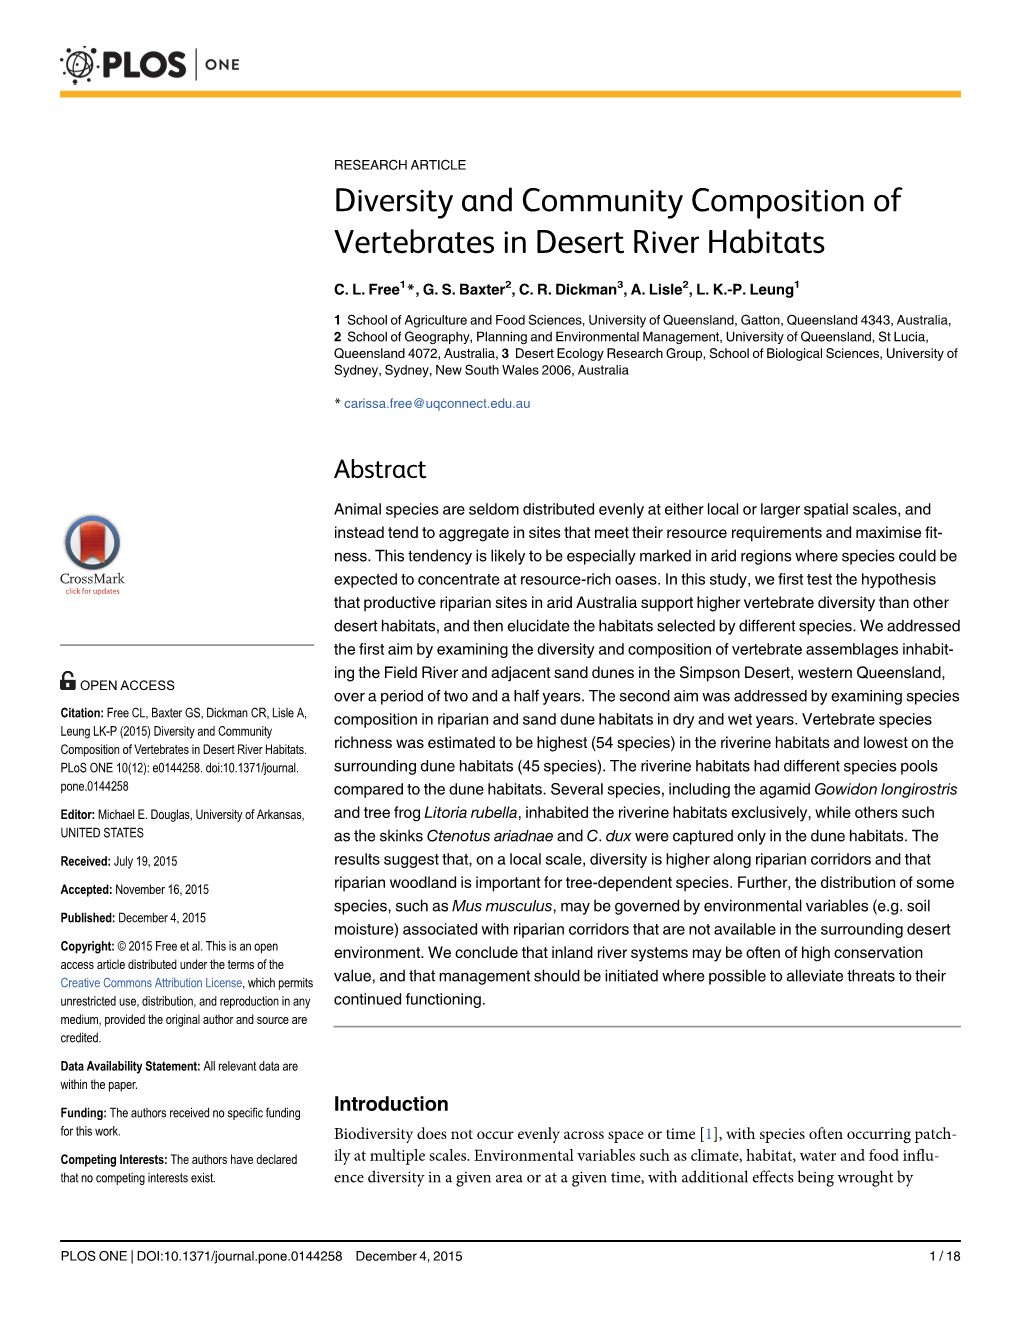 Diversity and Community Composition of Vertebrates in Desert River Habitats